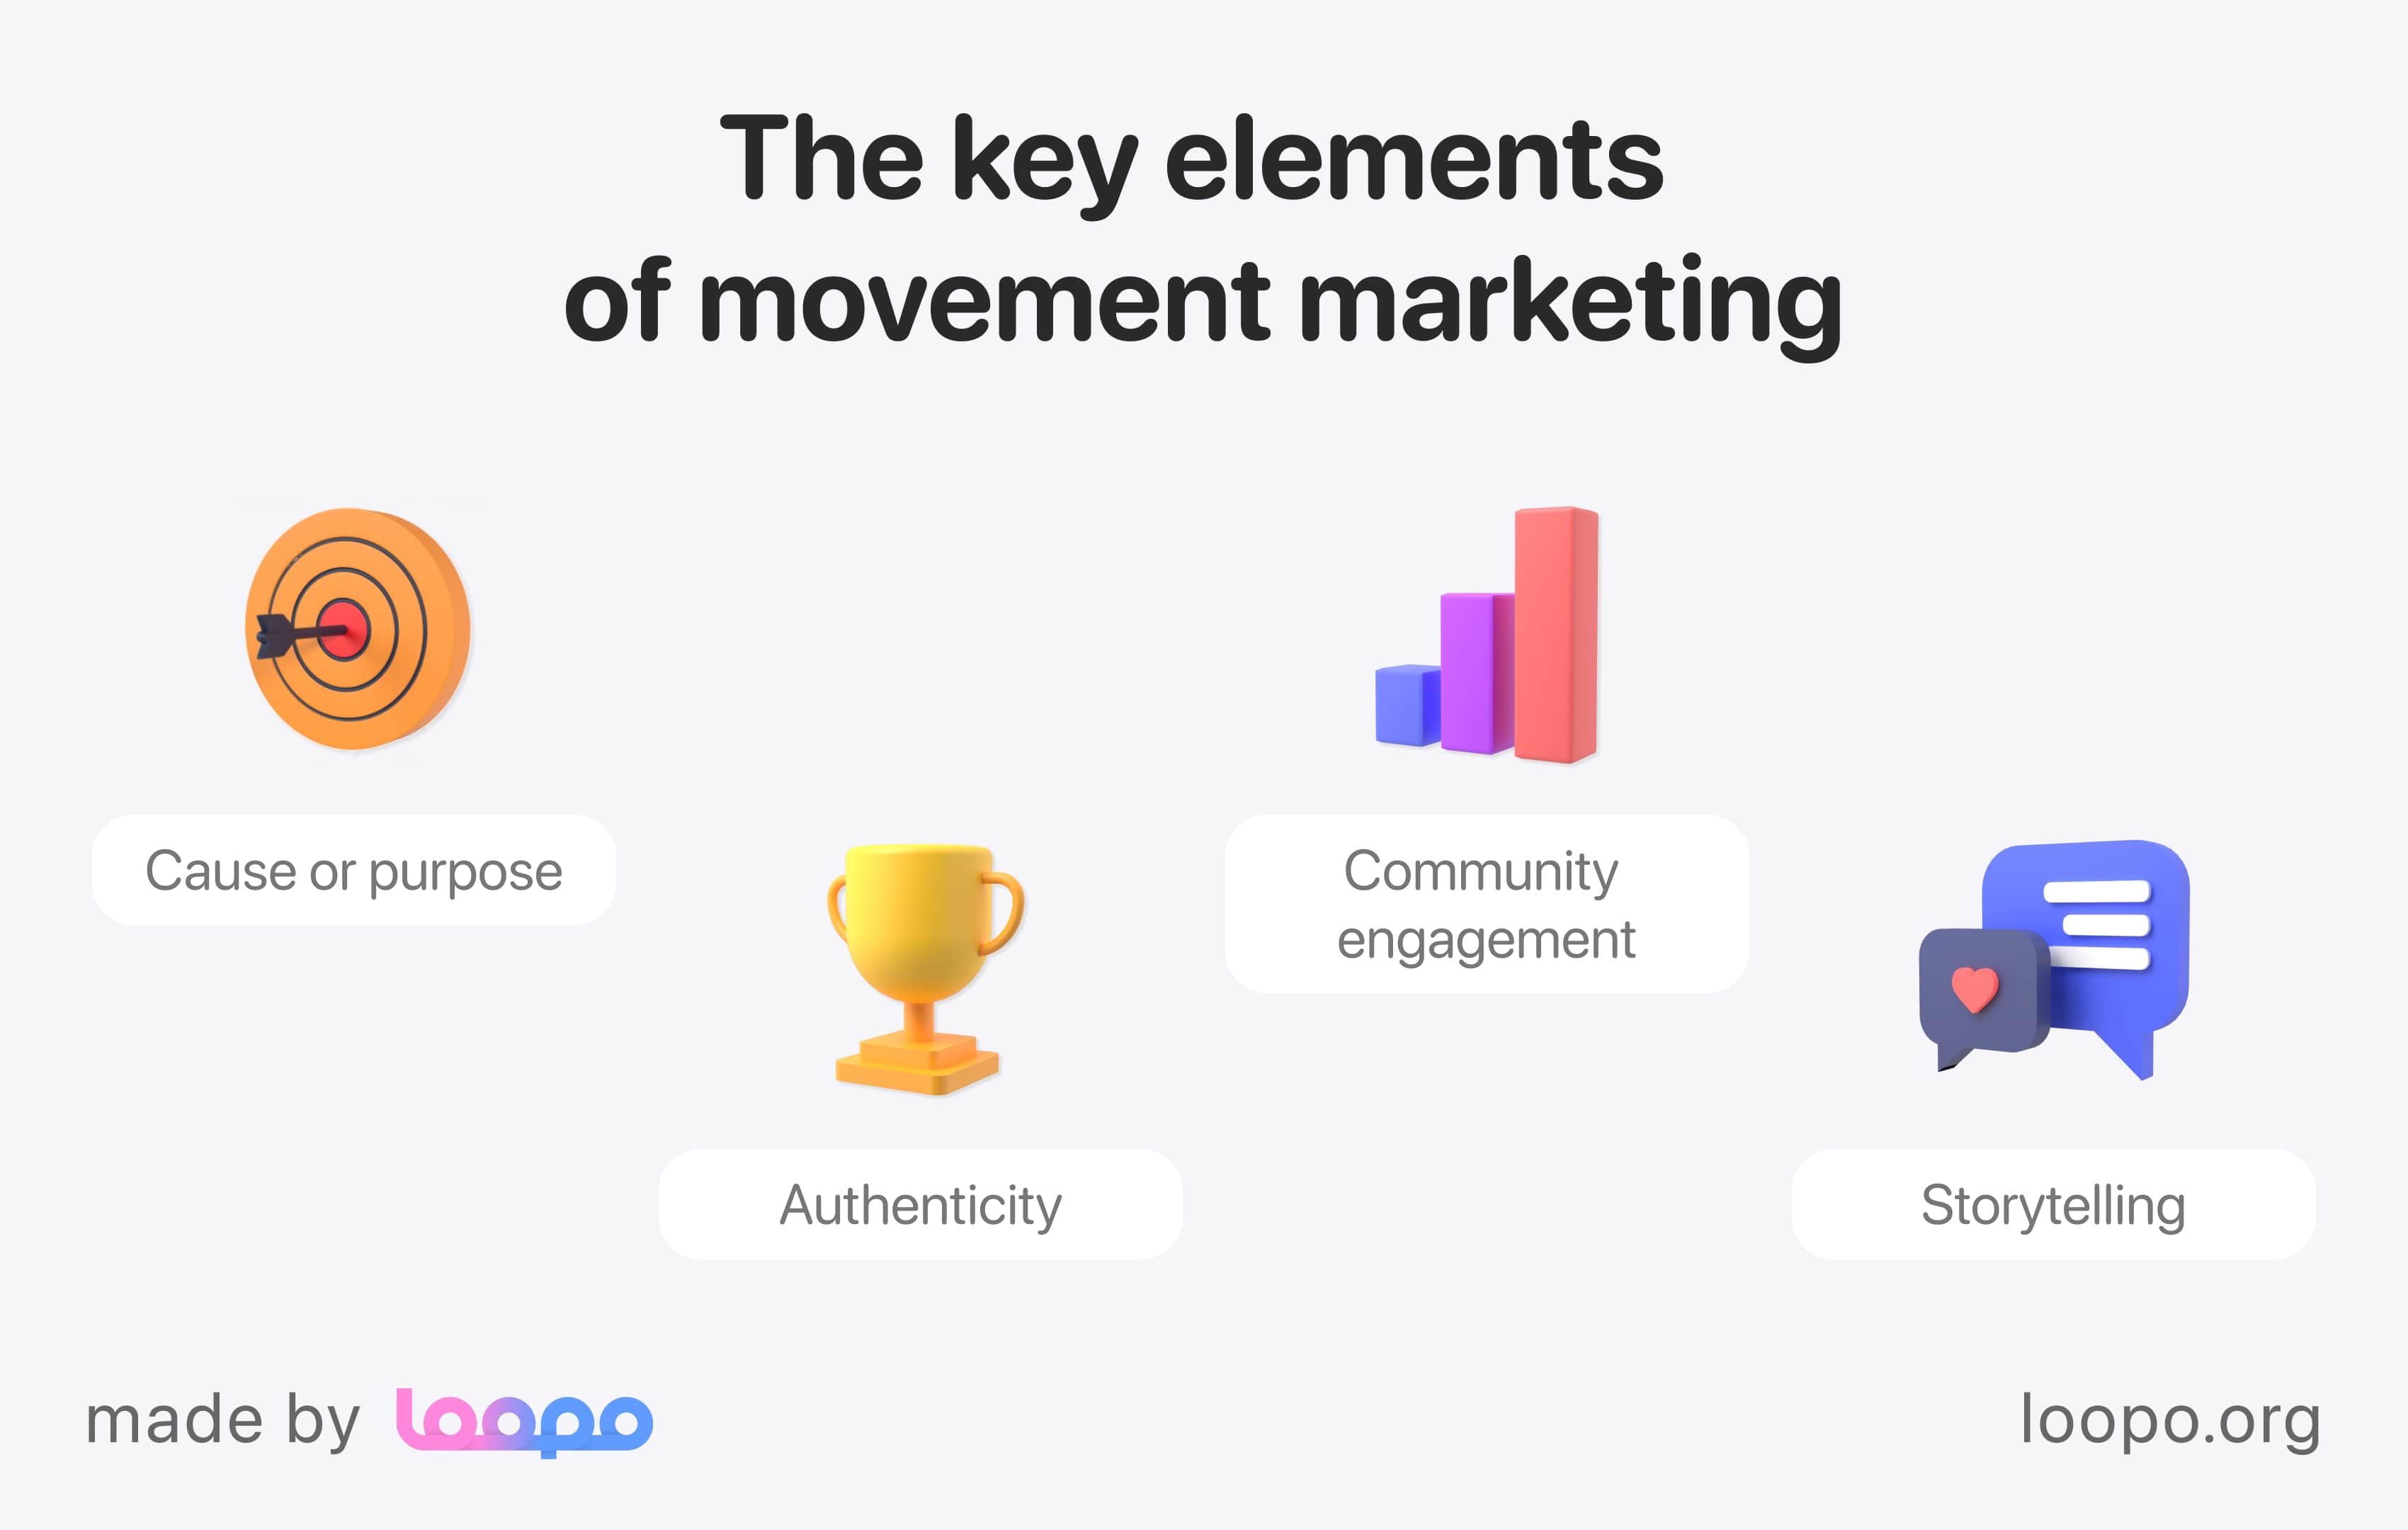 The key elements of movement marketing